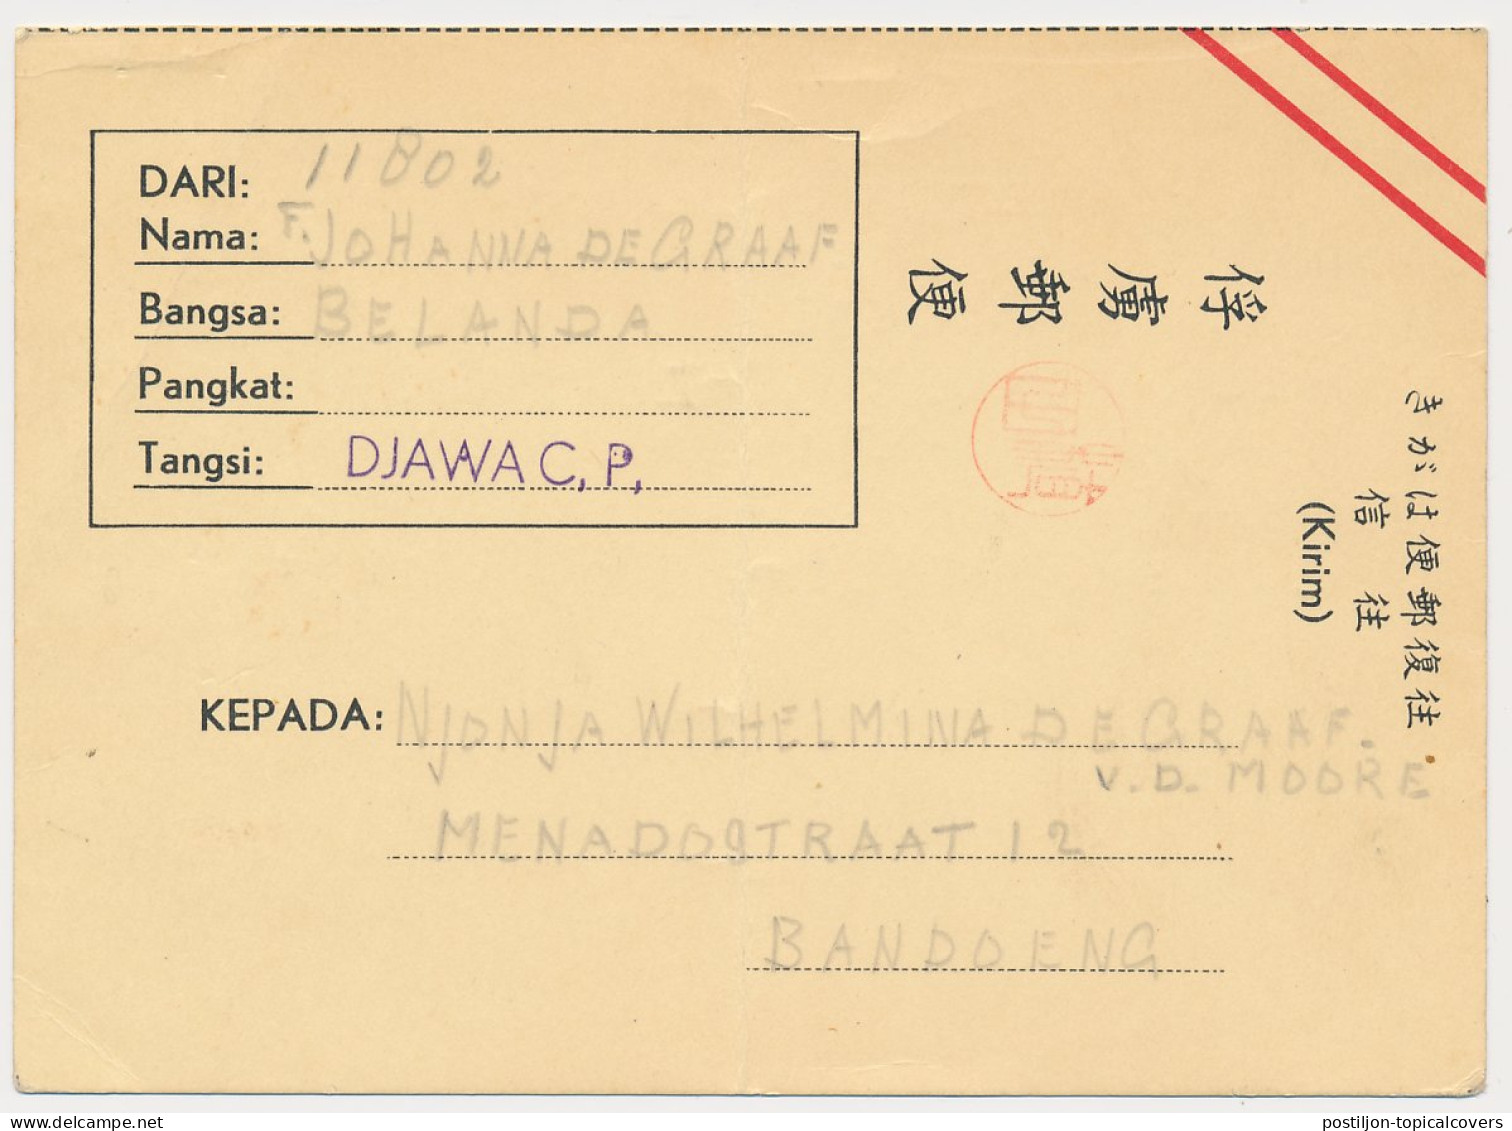 Censored POW Card Internee Bandoeng Netherlands Indies - Indie Olandesi